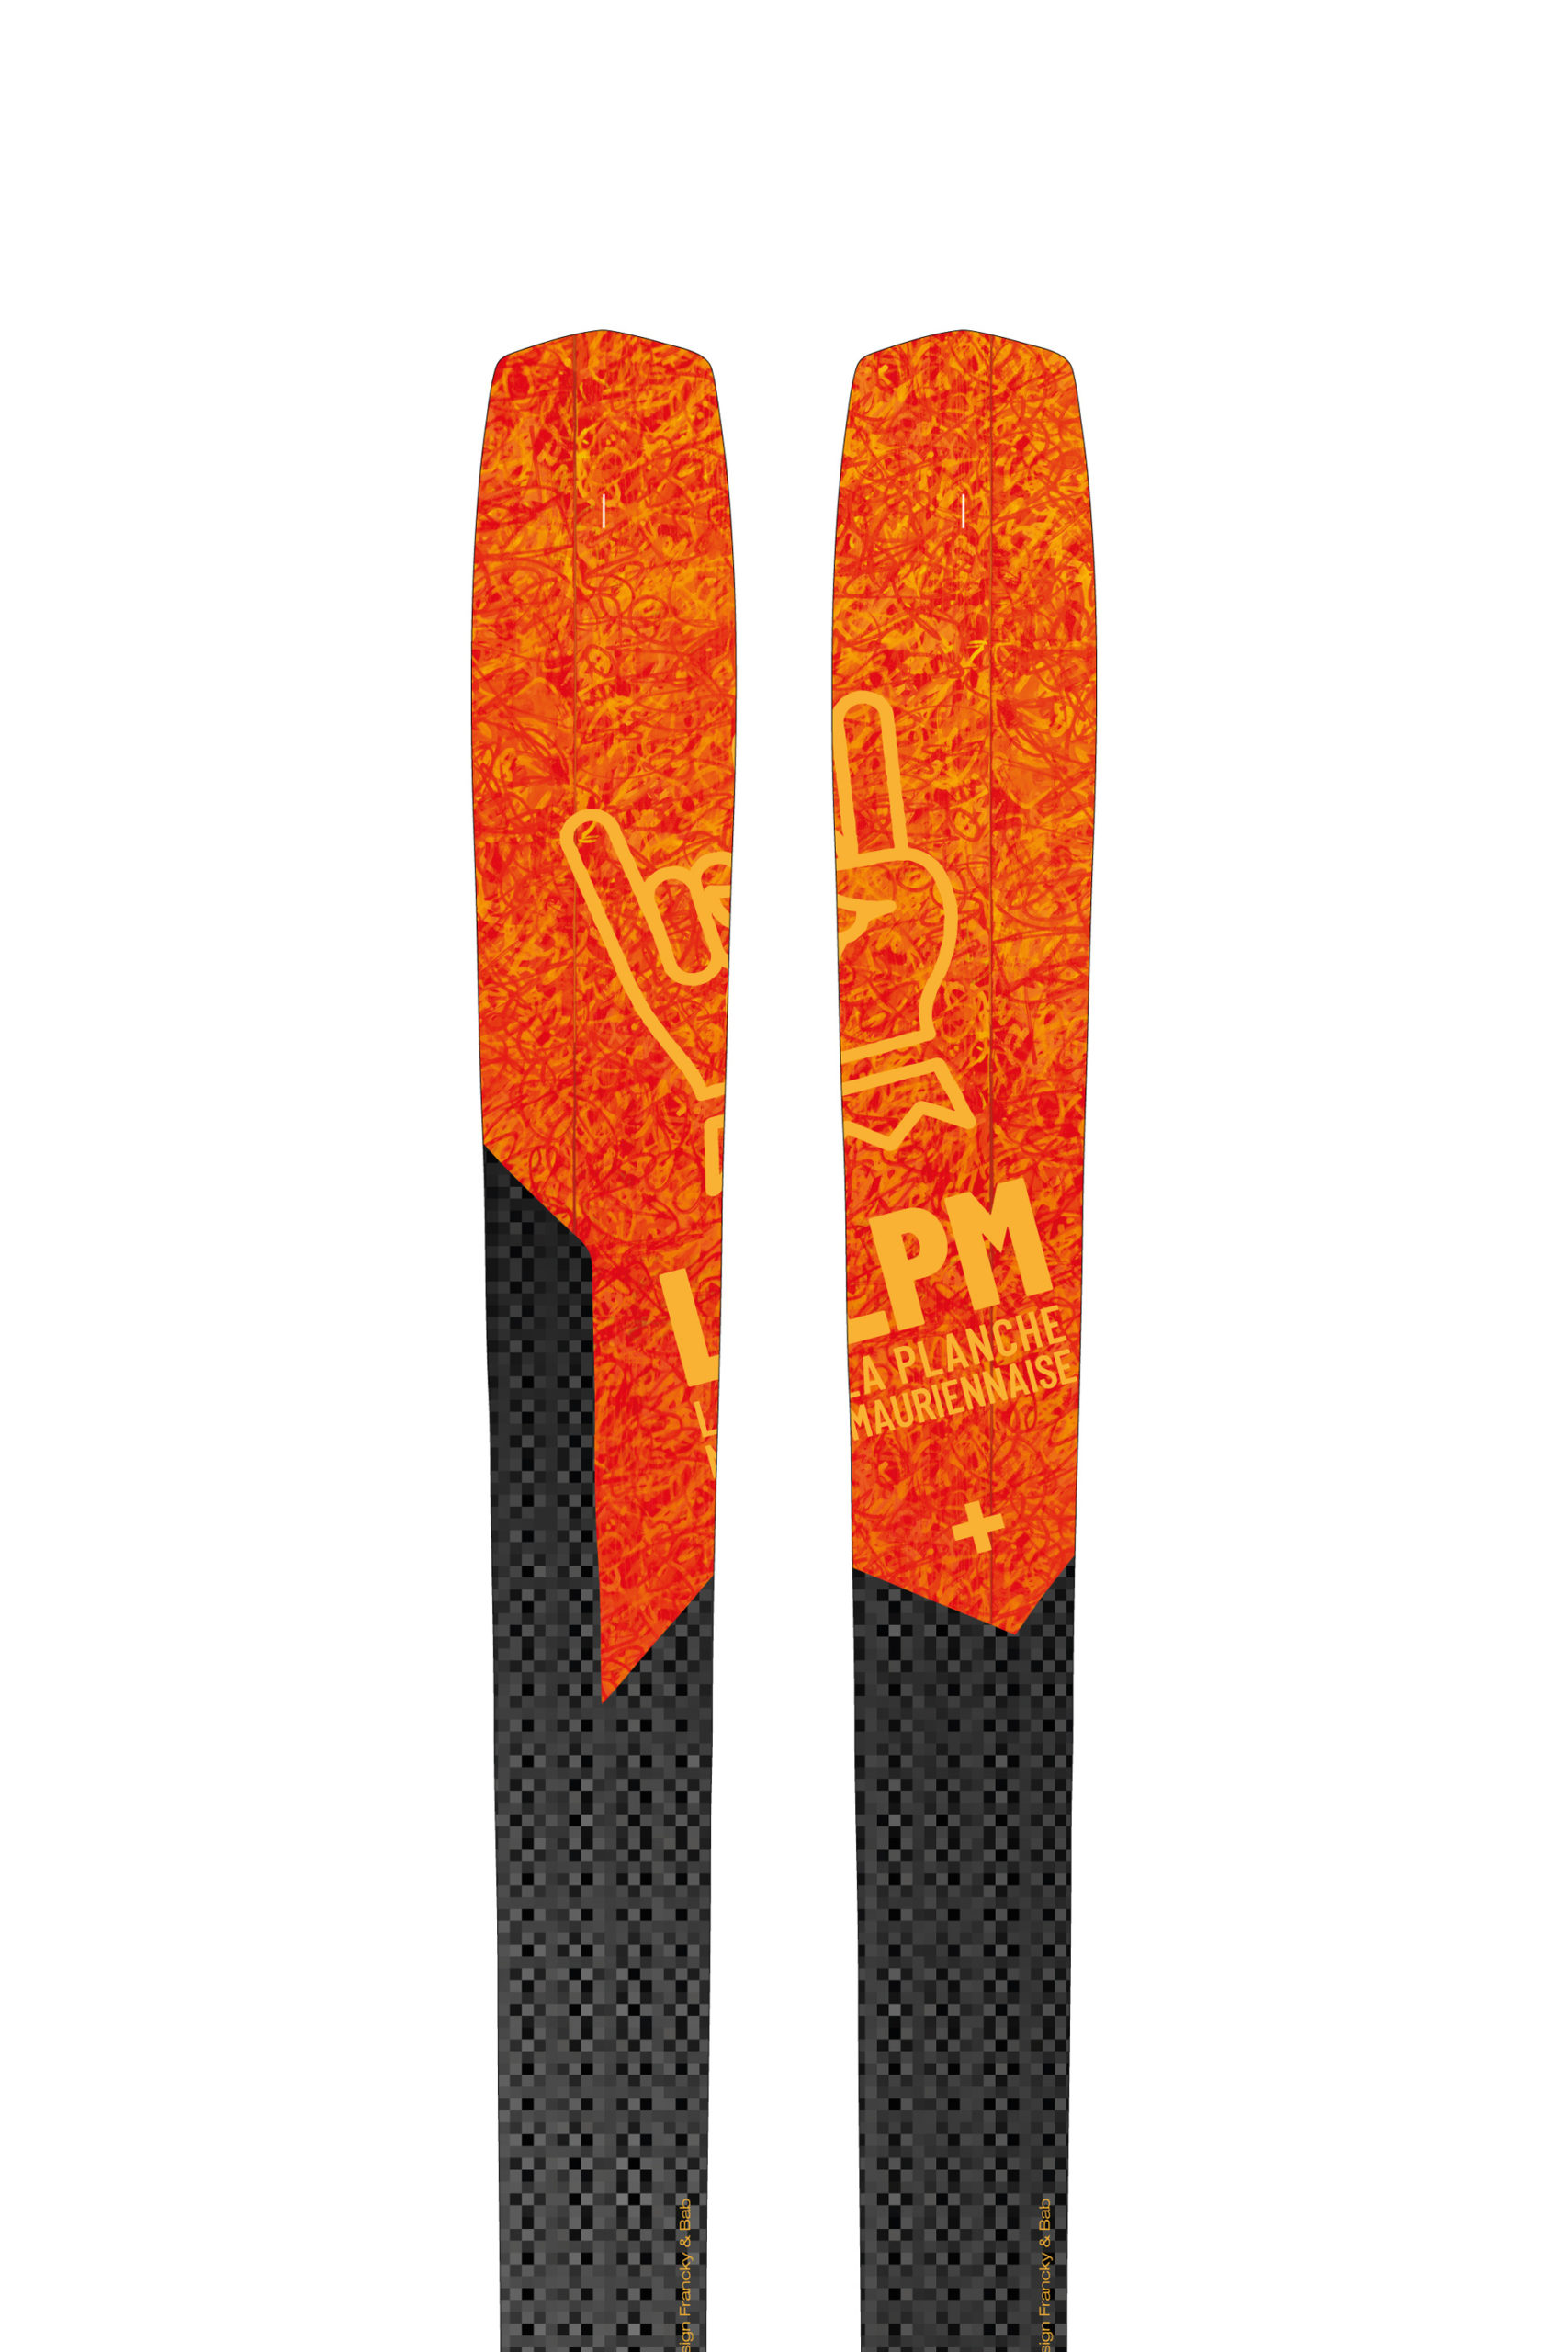 le 97 la planche mauriennaise lpm savoie mont blanc all mountain skis freerando ski freeride design alpes maurienne carbone artisan artisanat